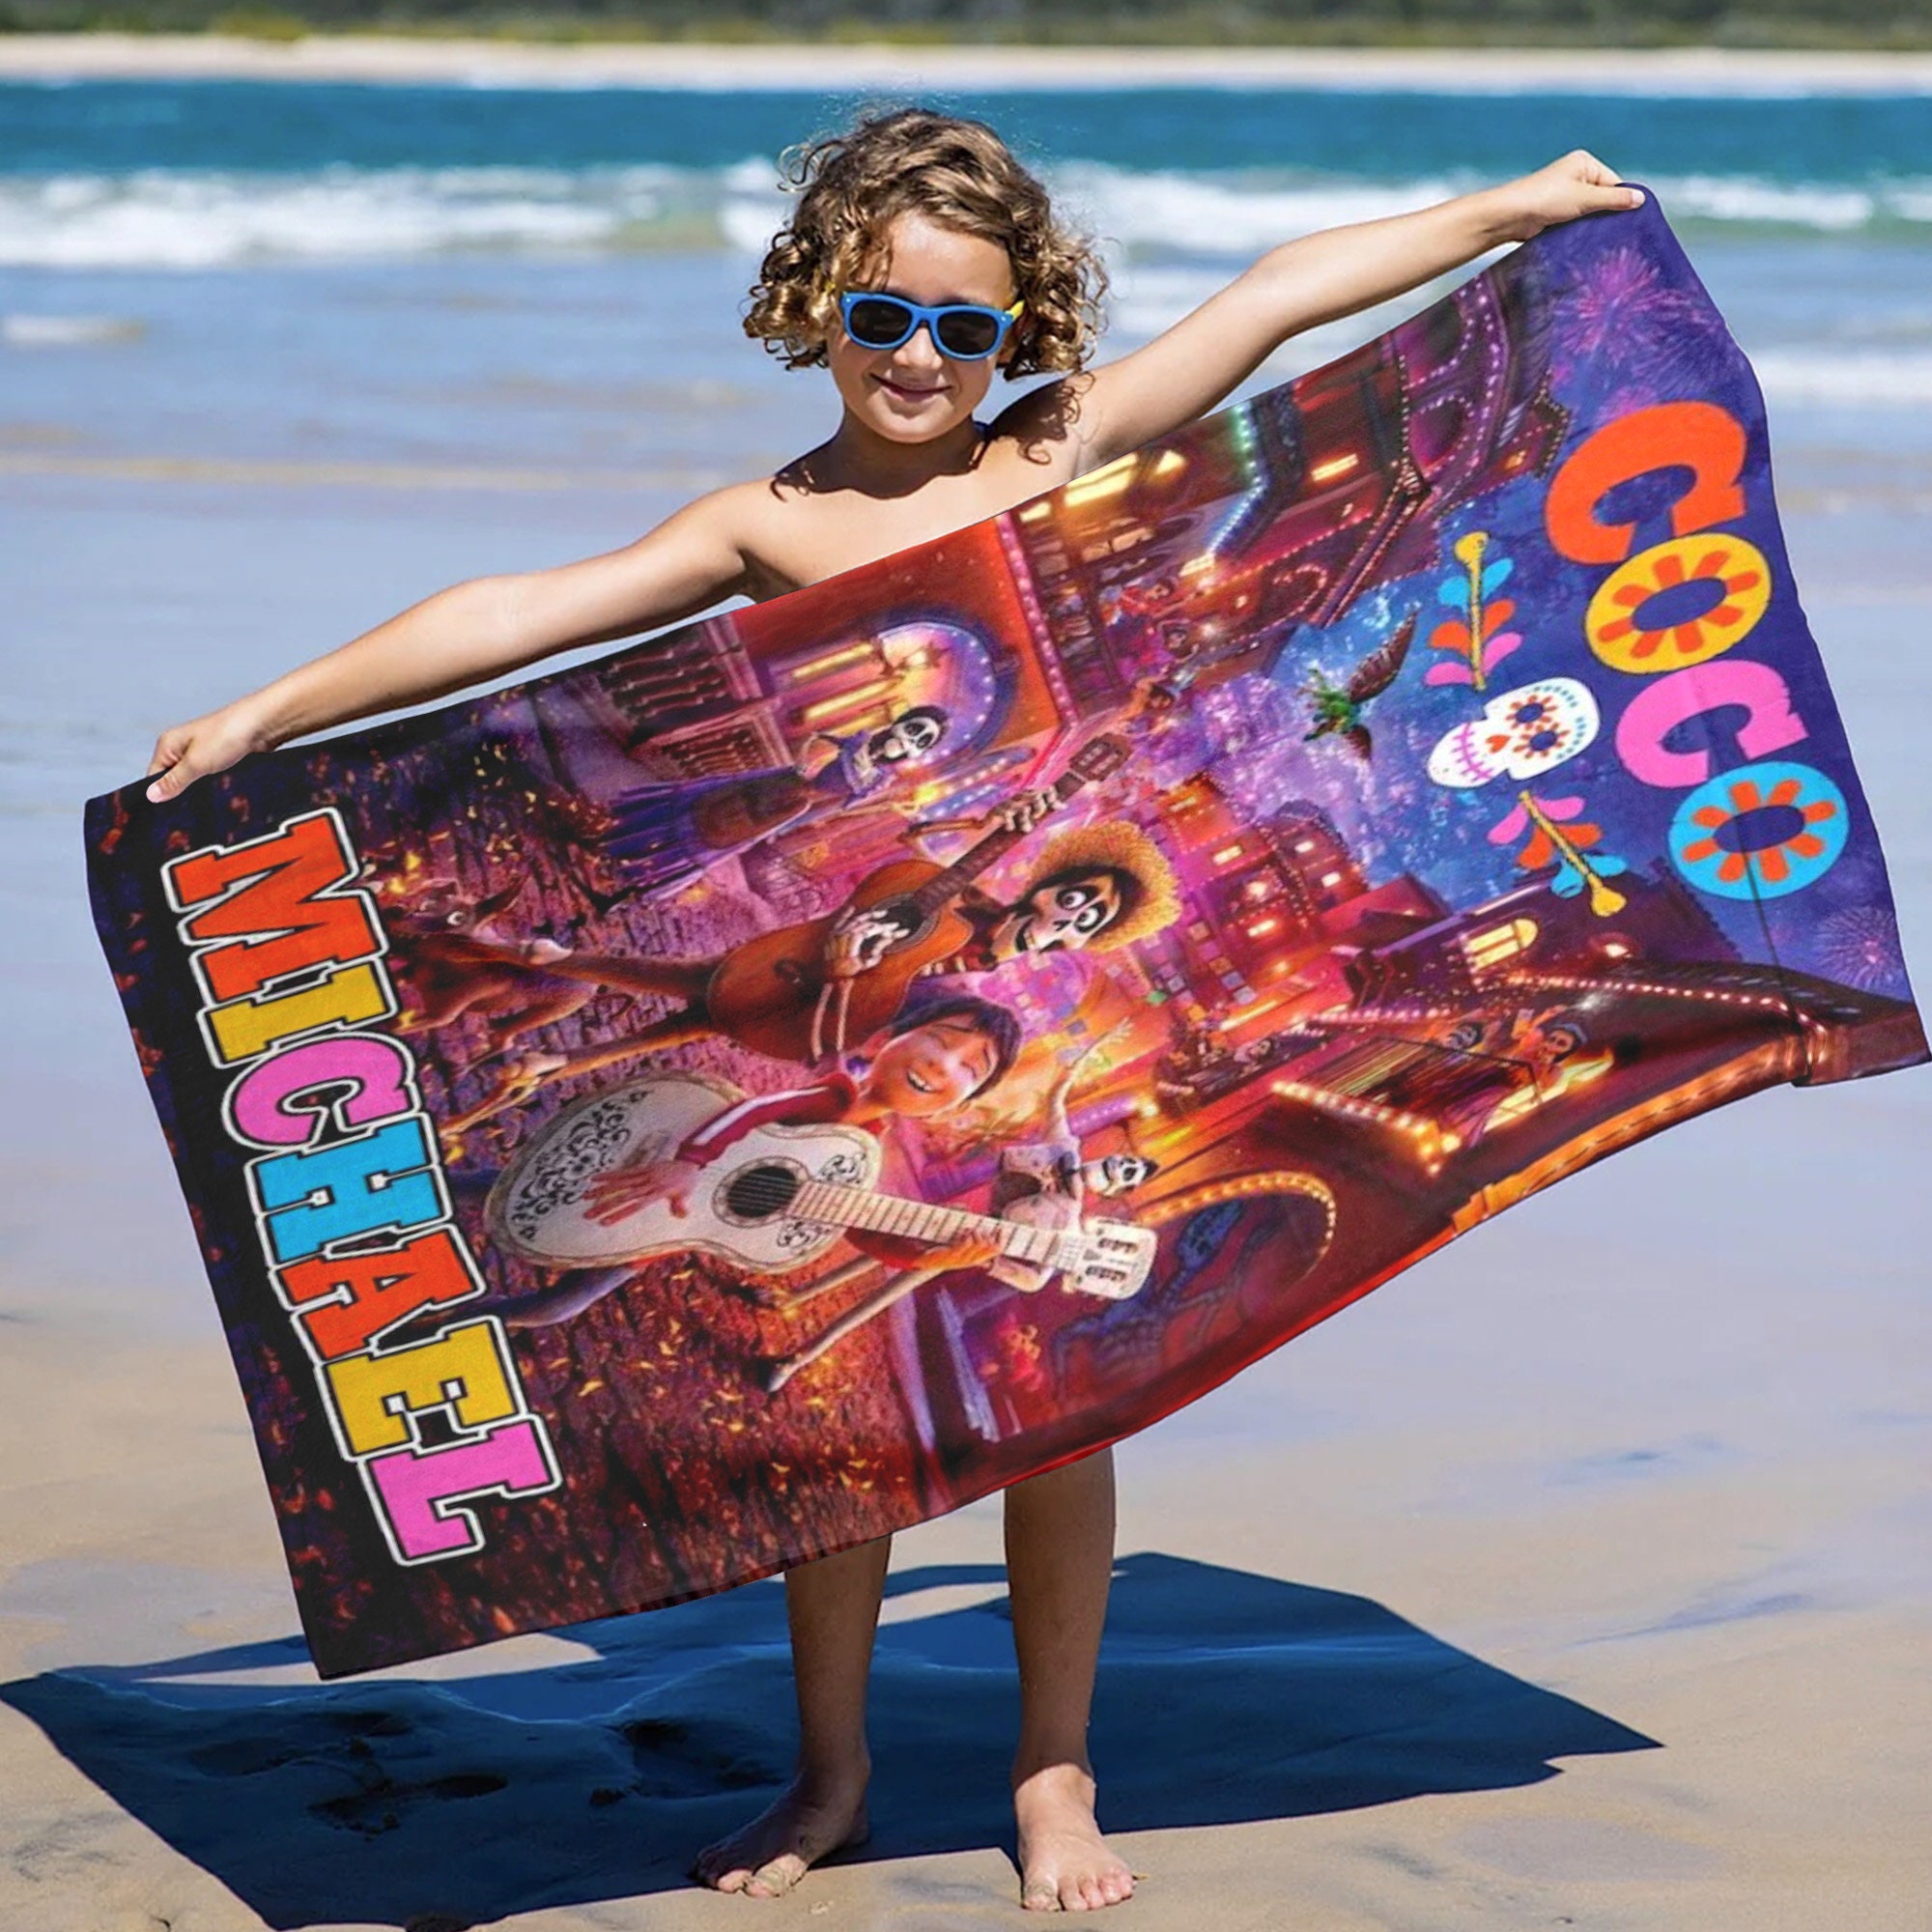 Personalized Family Emotional Movie Beach Towels, Custom Name Musical Movie Beach Towel